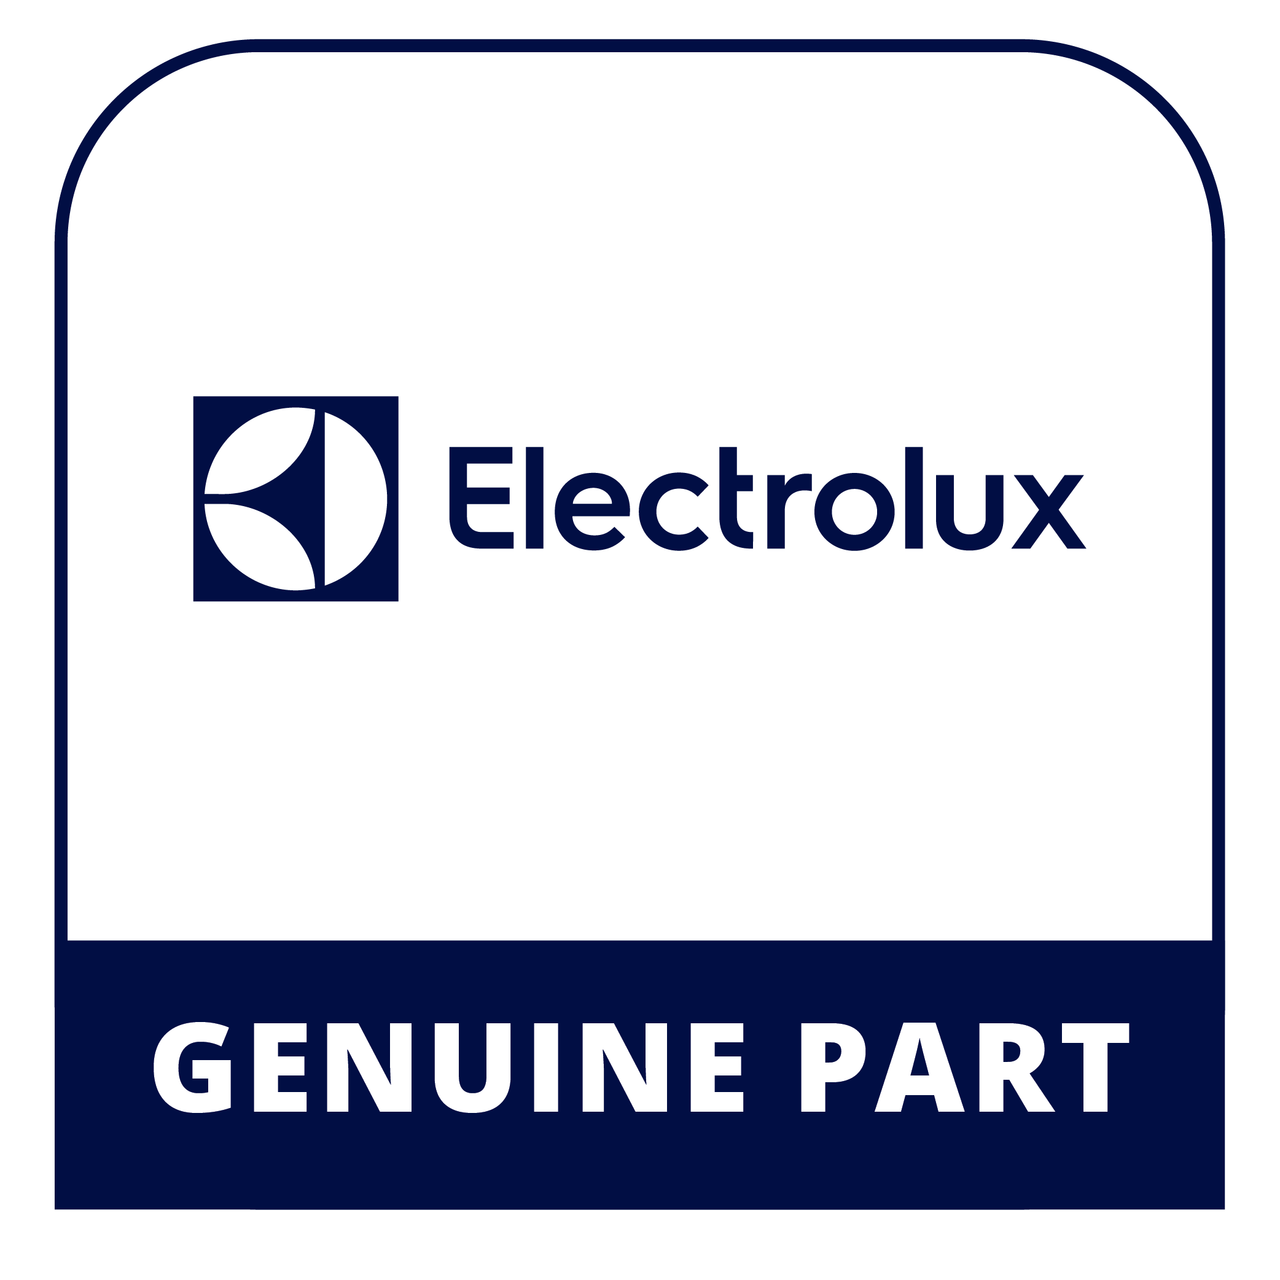 Frigidaire - Electrolux 316655001 - Overlay - Genuine Electrolux Part